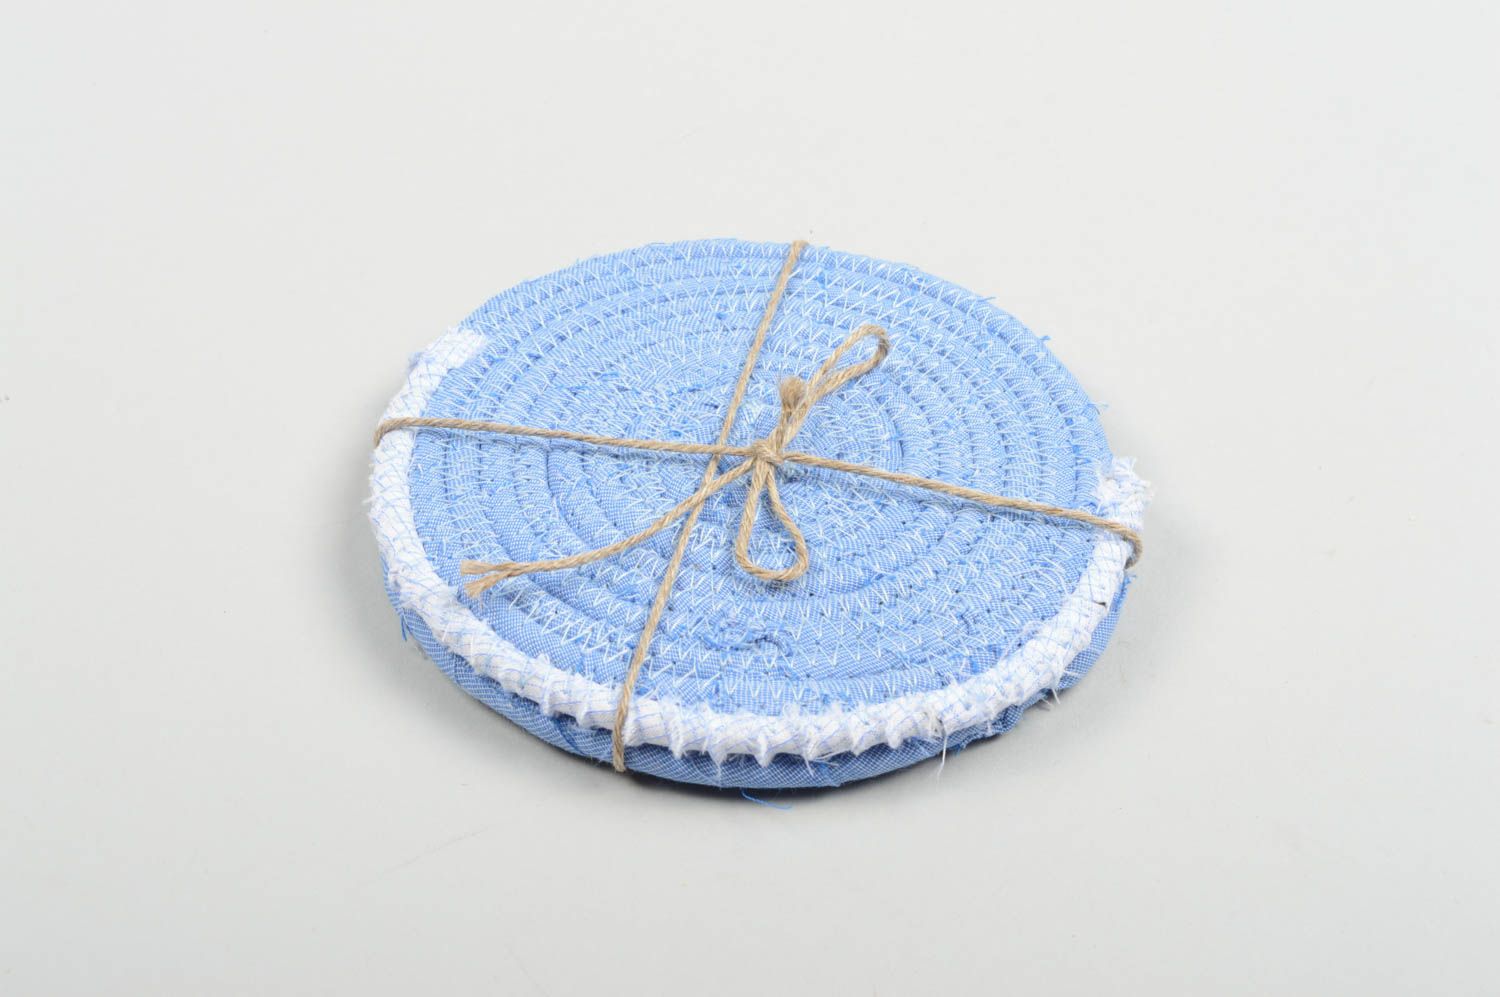 Unusual handmade fabric coaster hot pads kitchen textiles table decor ideas photo 5